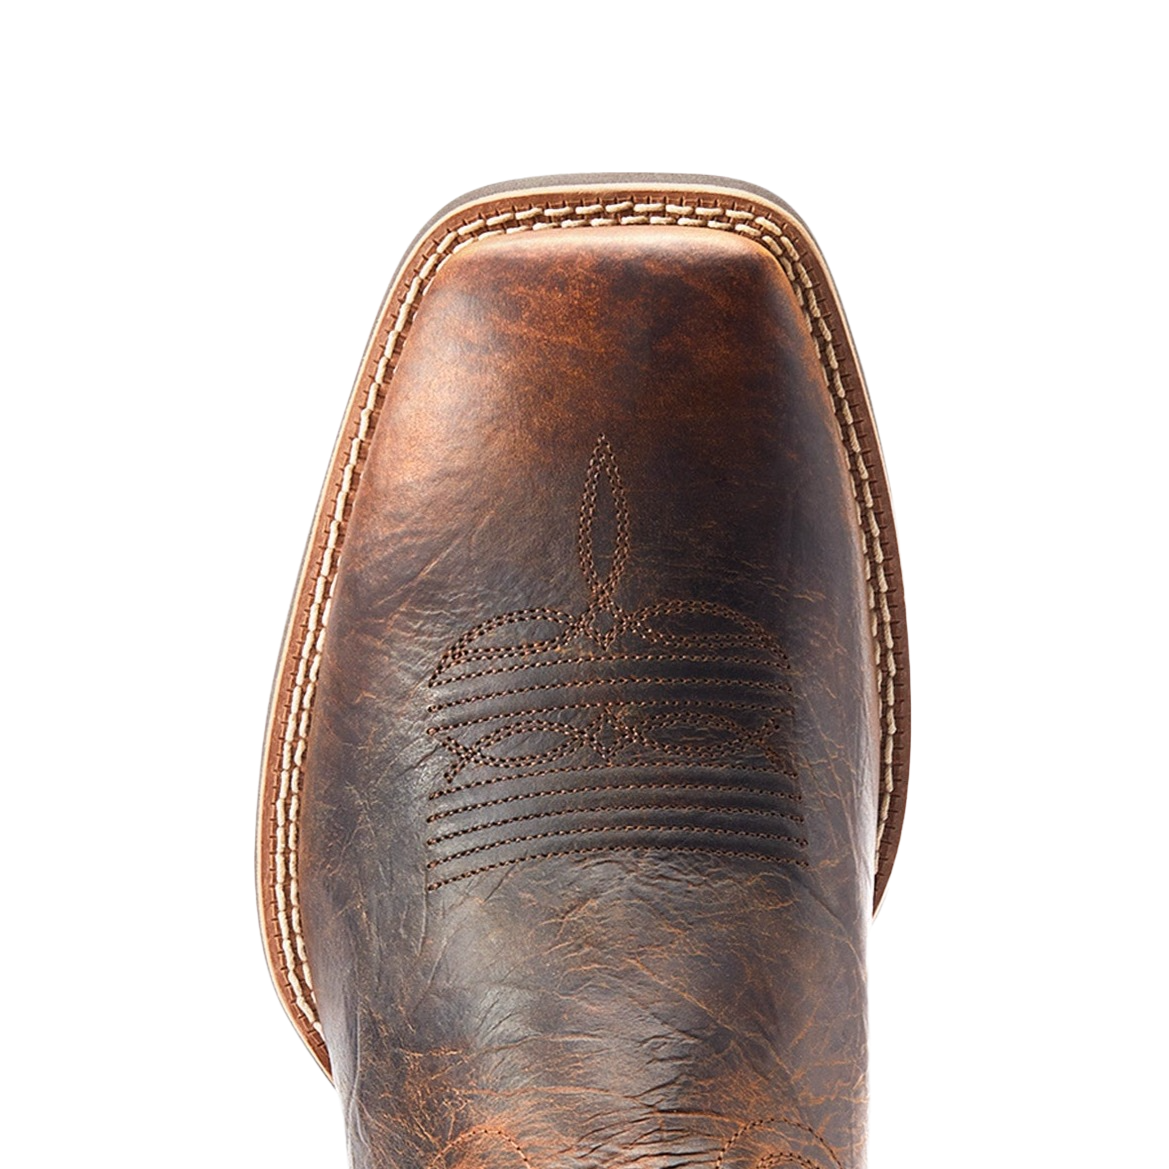 Ariat Men's Slingshot Lightweight Brown Western Boots 10044567